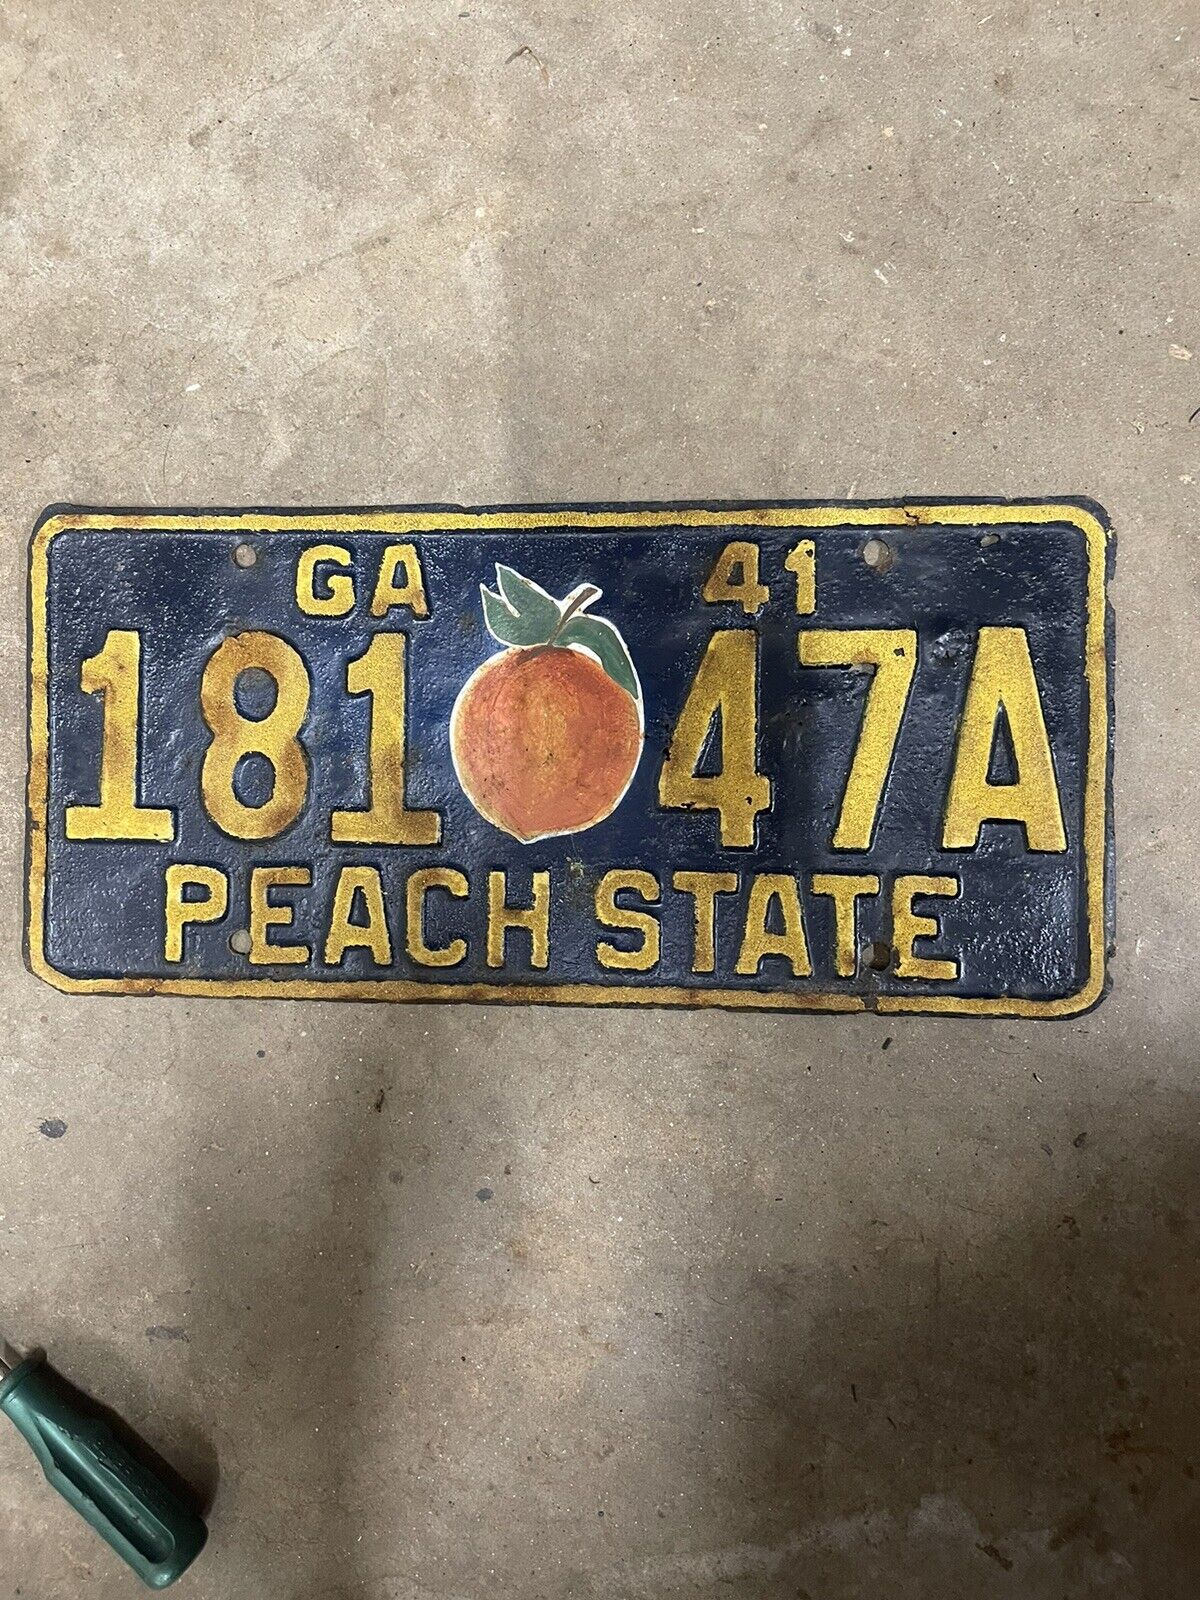 License Plate Georgia 1941  Peach State 181-47A